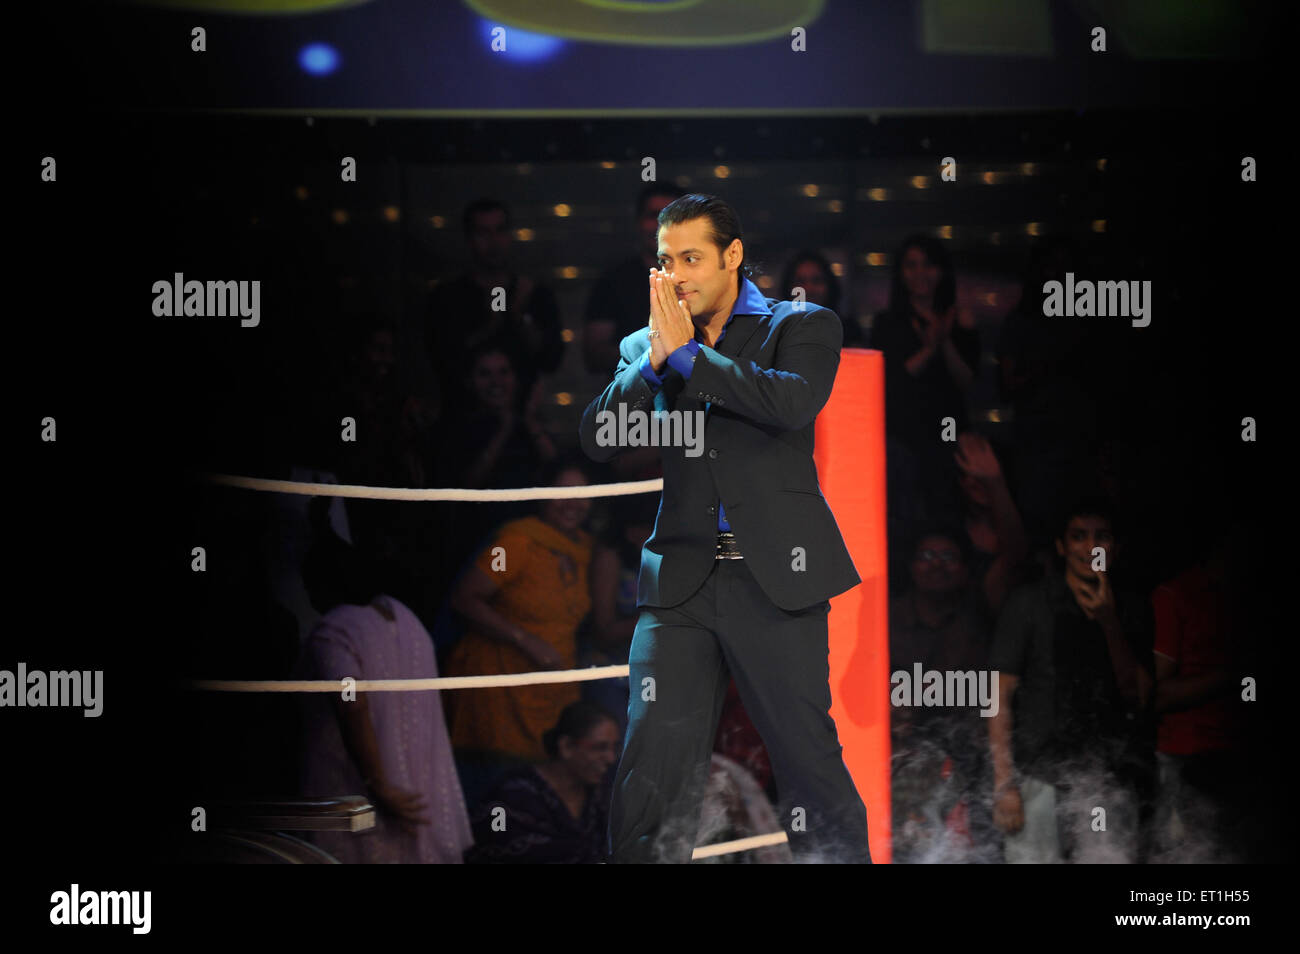 Salman Khan, Dus Ka Dum show, Abdul Rashid Salim Salman Khan, Indian actor, film producer, television personality, India, Asia Stock Photo